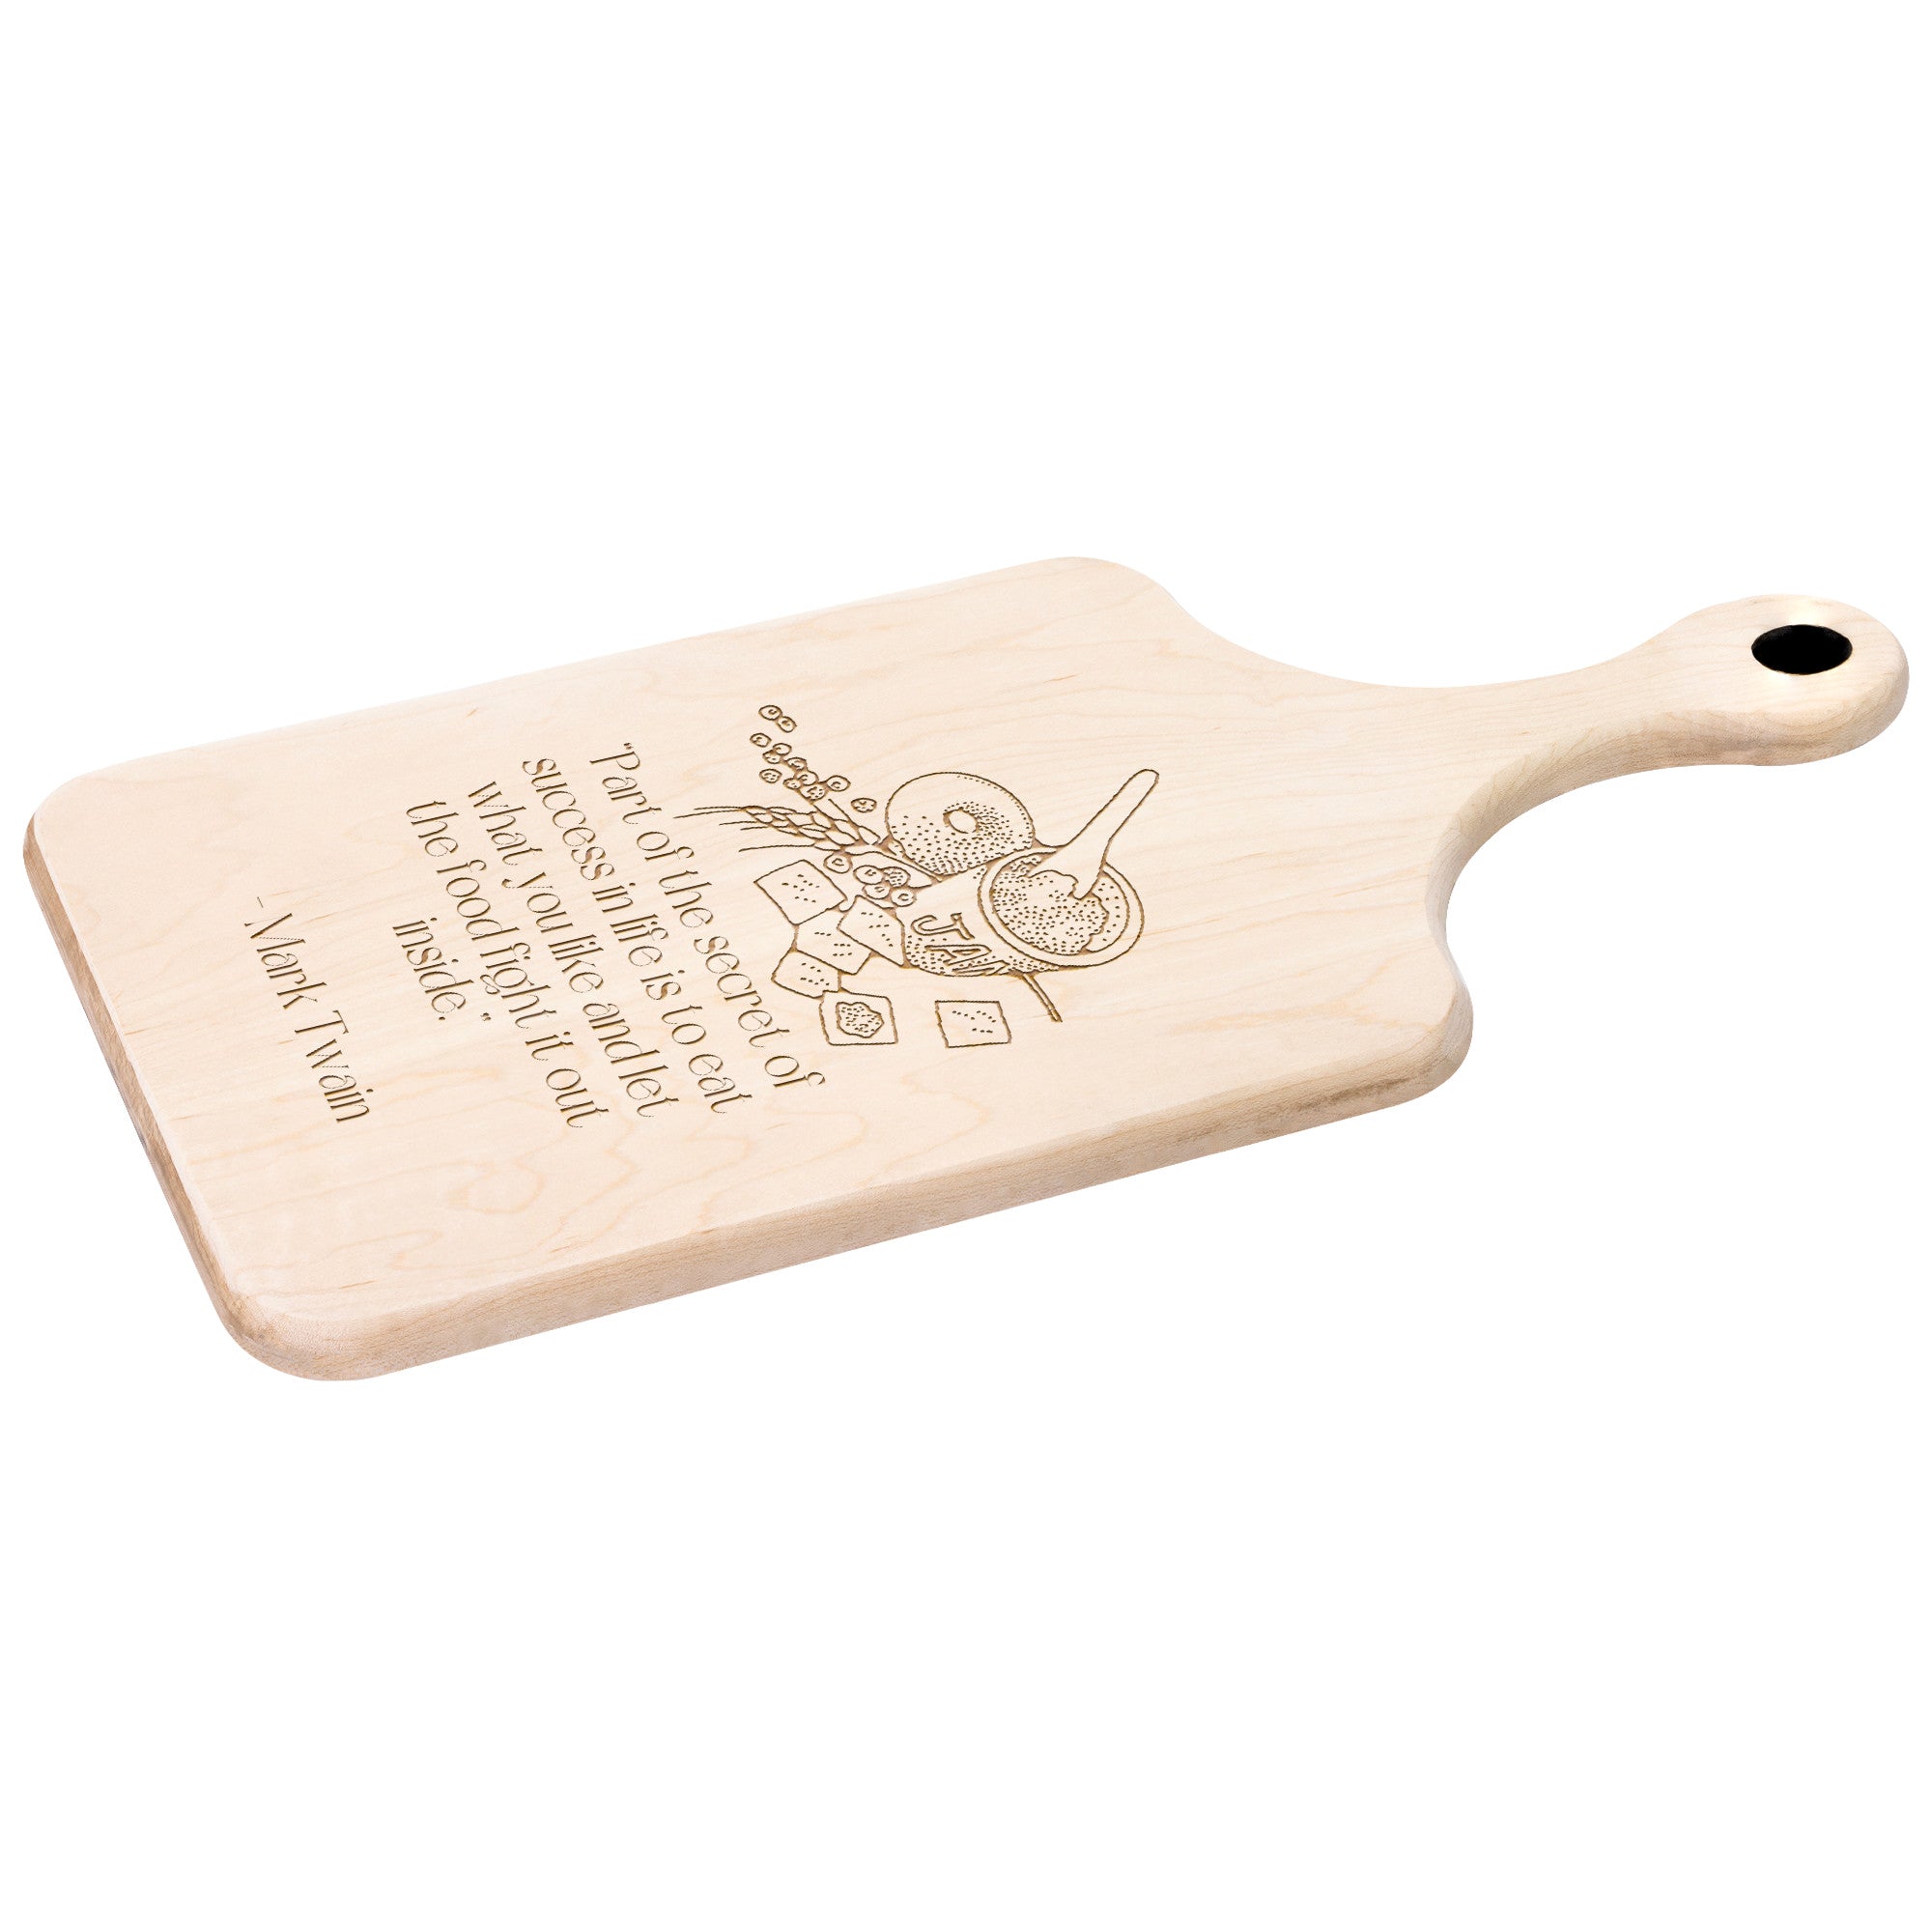 Hardwood Paddle Cutting Board - Variant 17